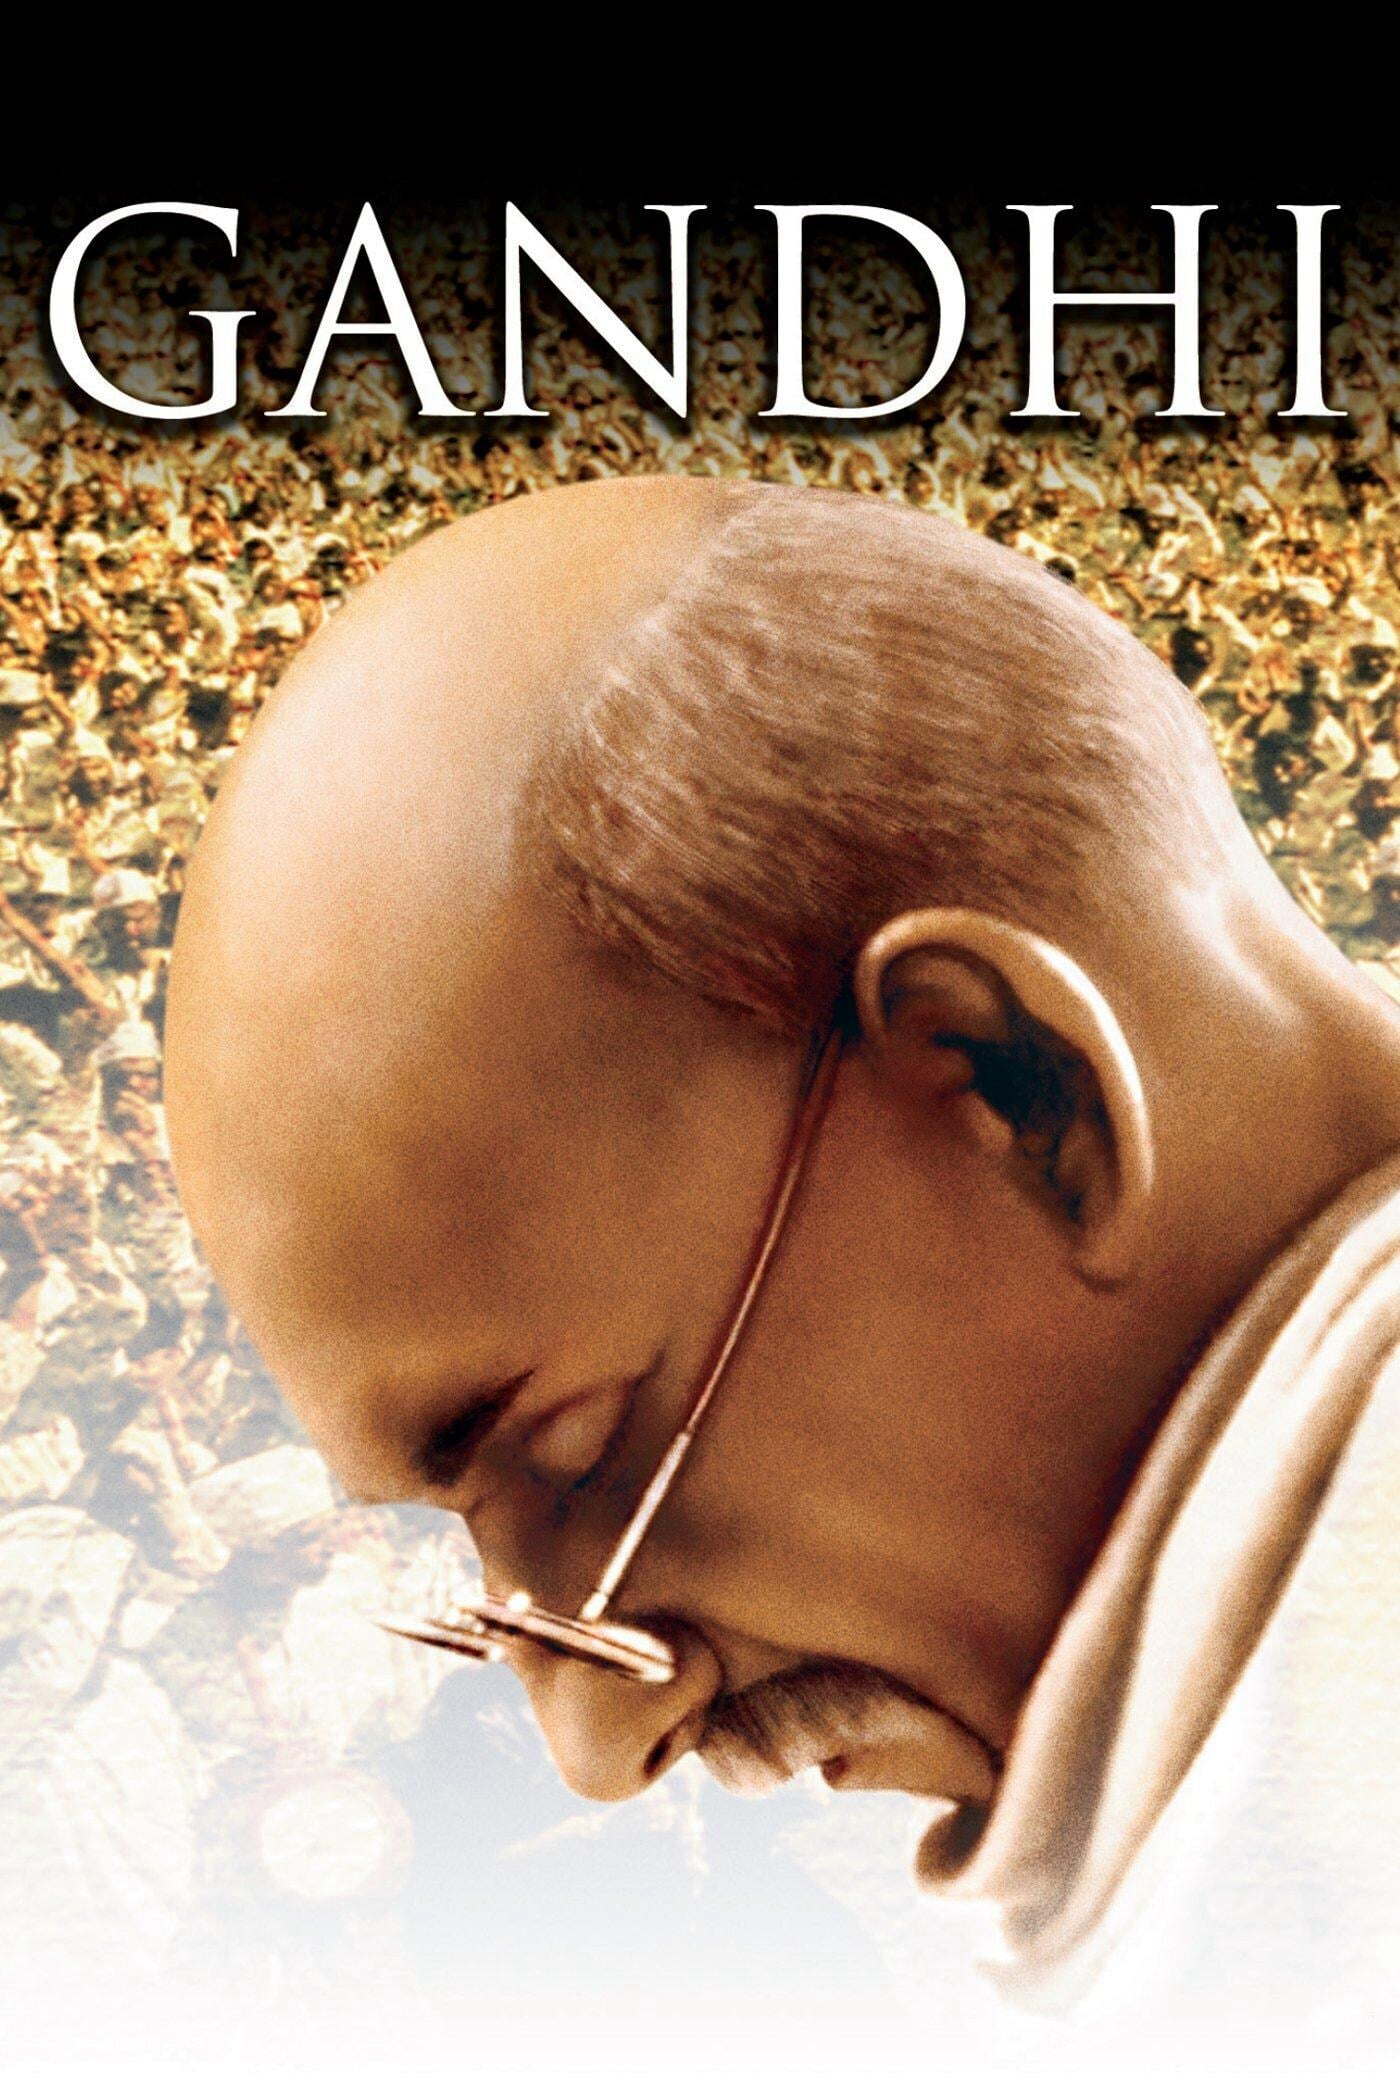 Poster Phim Cuộc Đời Gandhi (Gandhi)